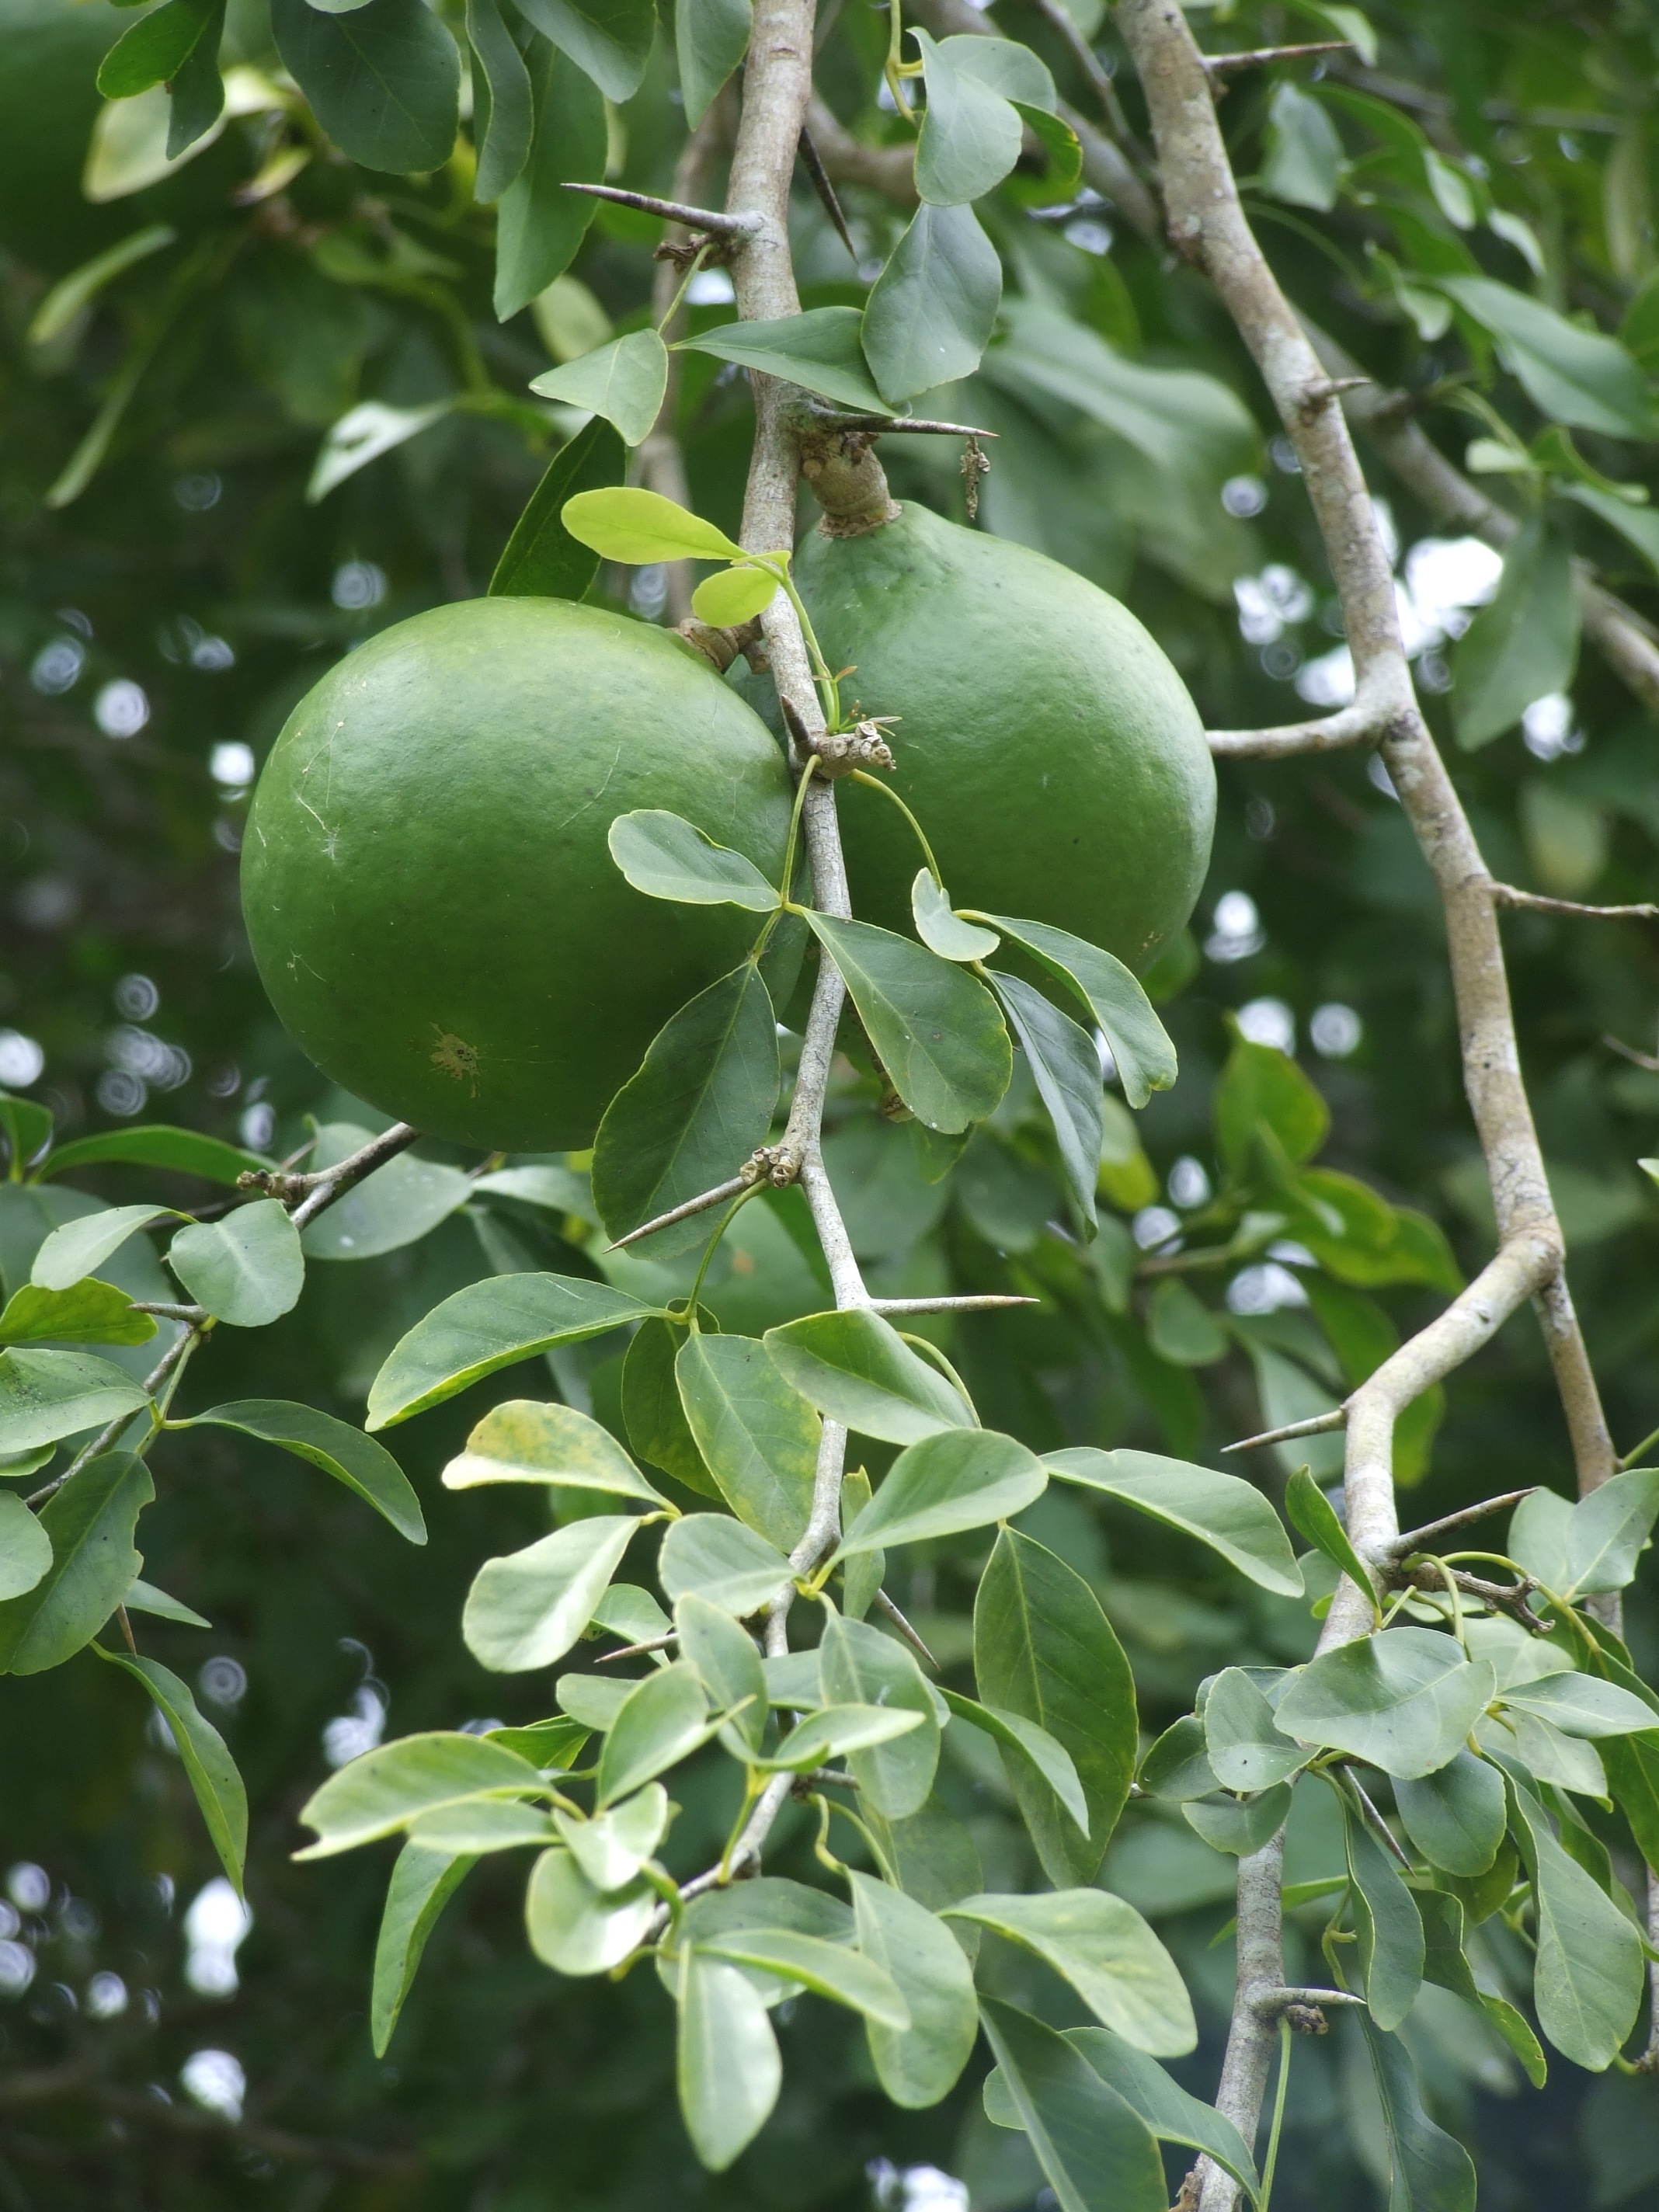 Aegle marmelos - Bael fruit, matoom, Indian quince, golden apple, holy fruit,  stone apple, elephant apple — Phytognosis